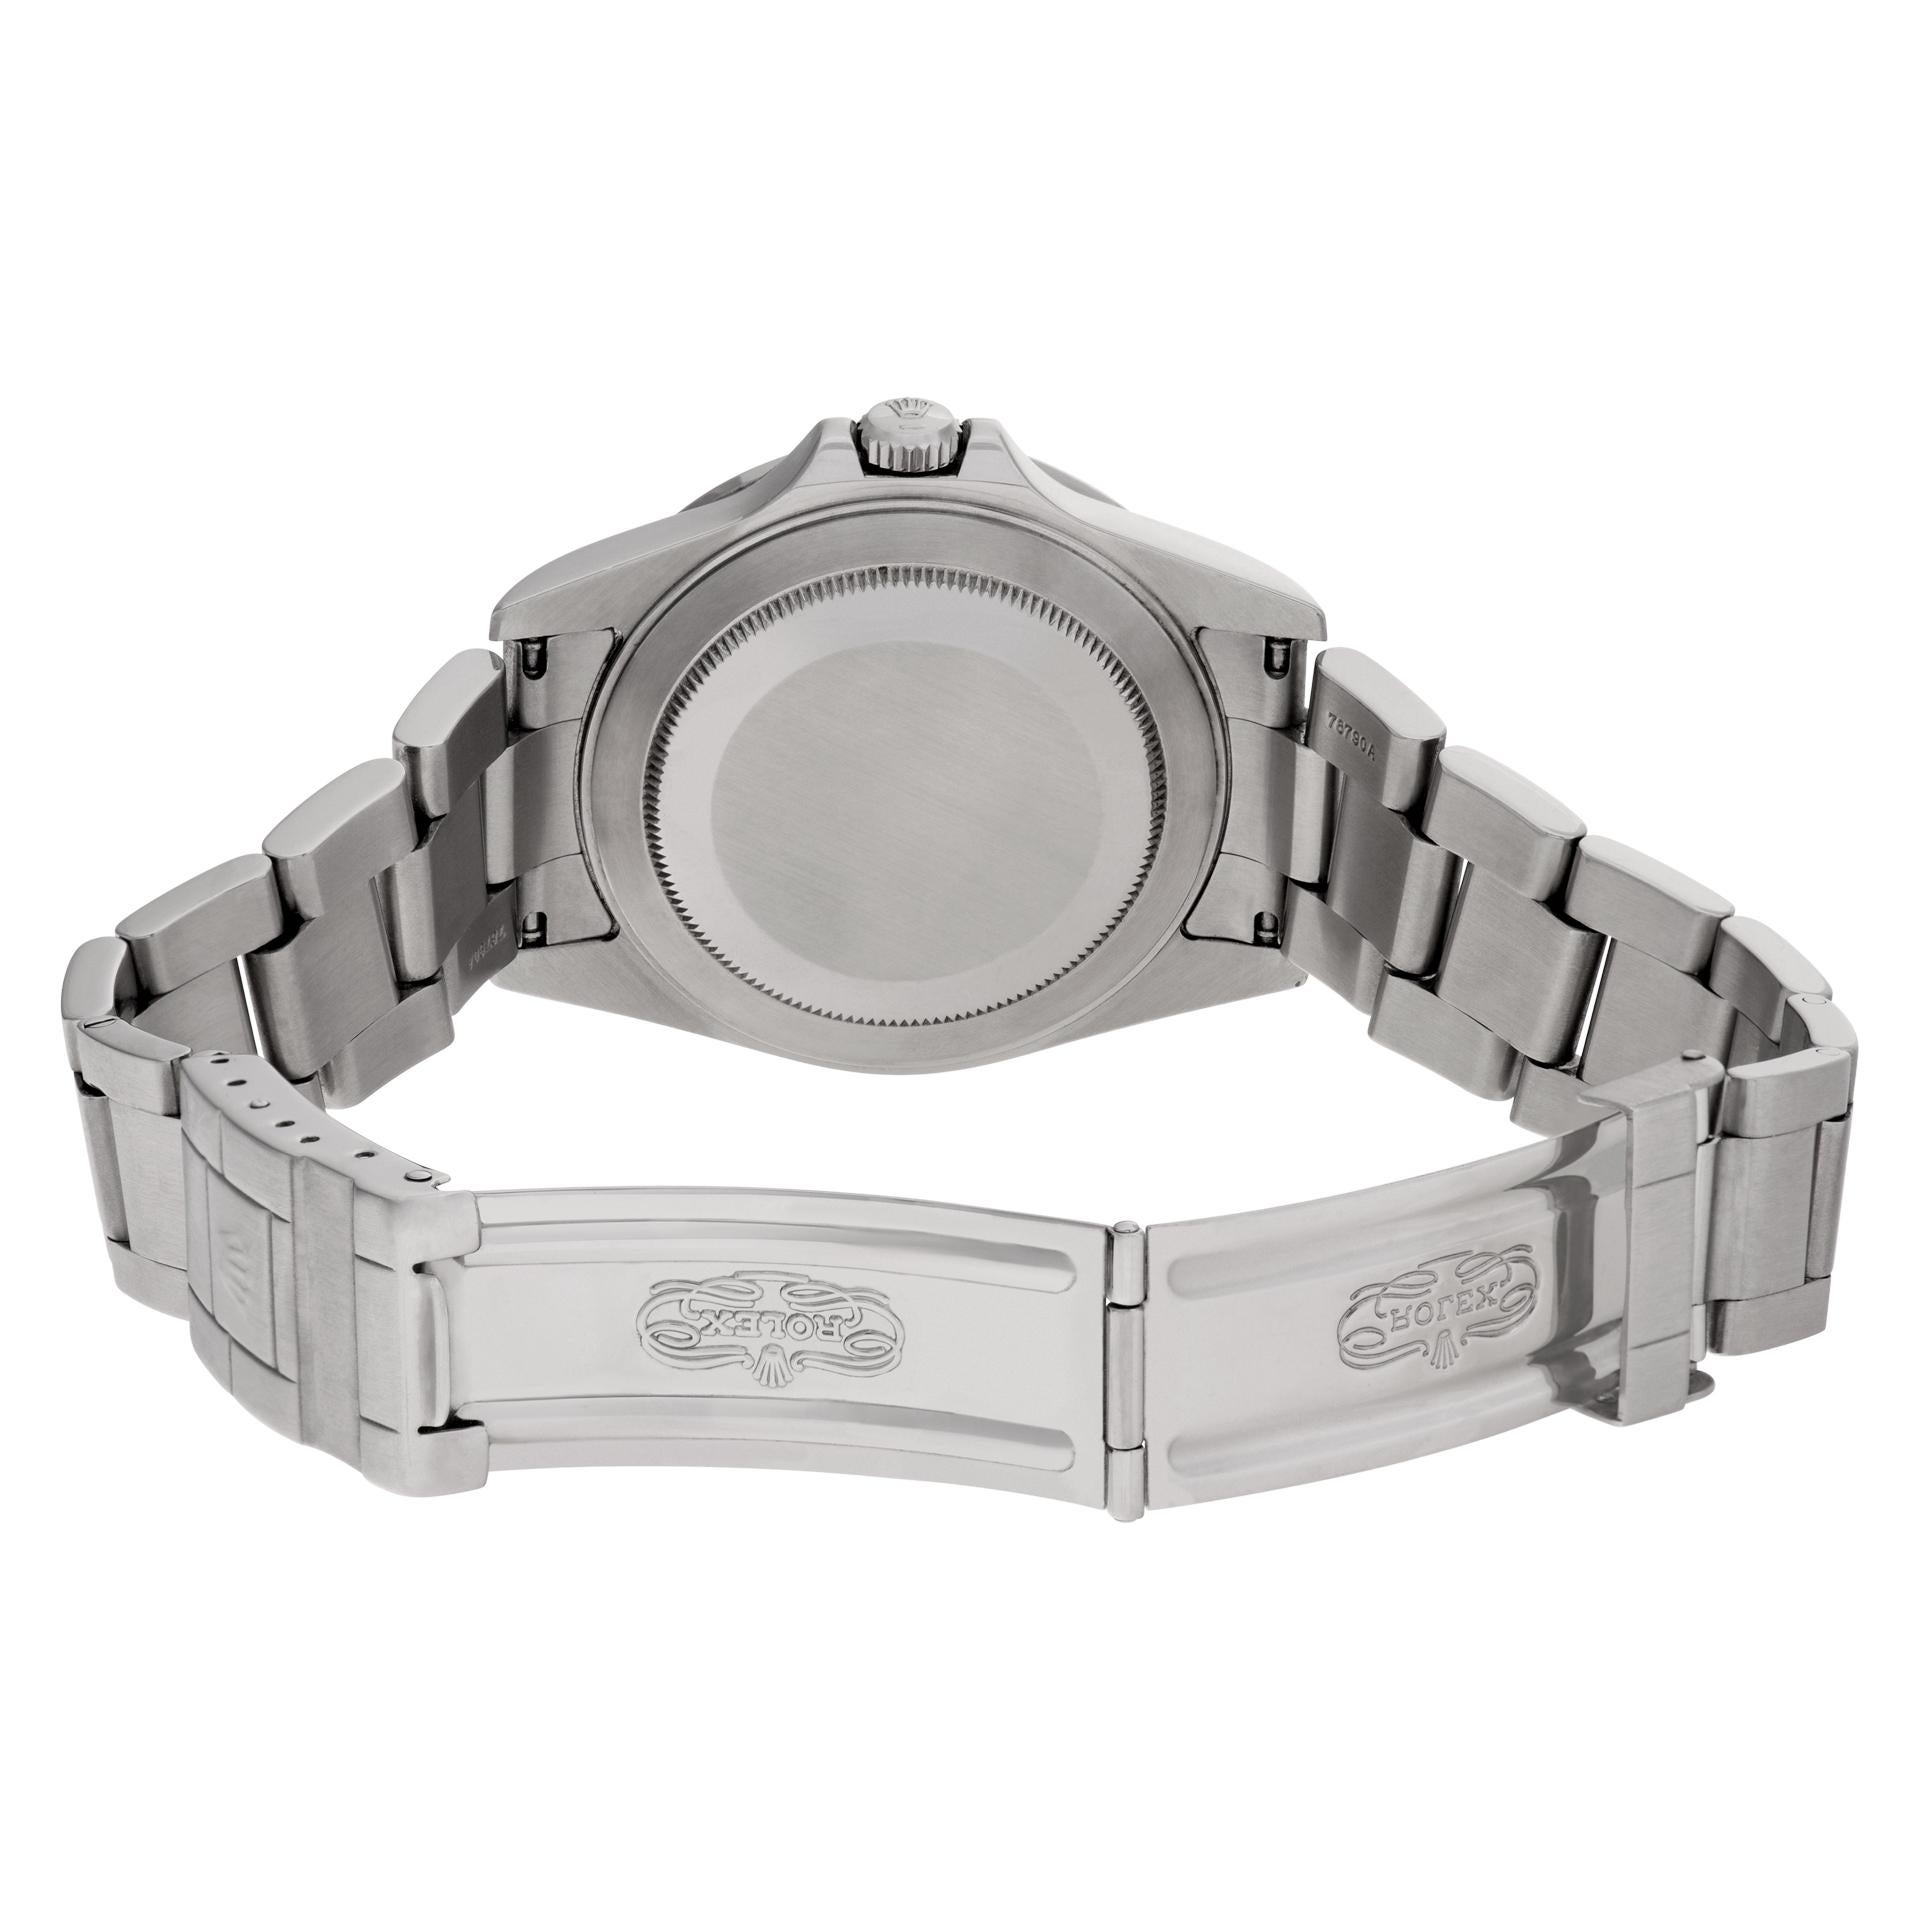 Rolex Explorer II stainless steel Automatic Wristwatch Ref 16570 1